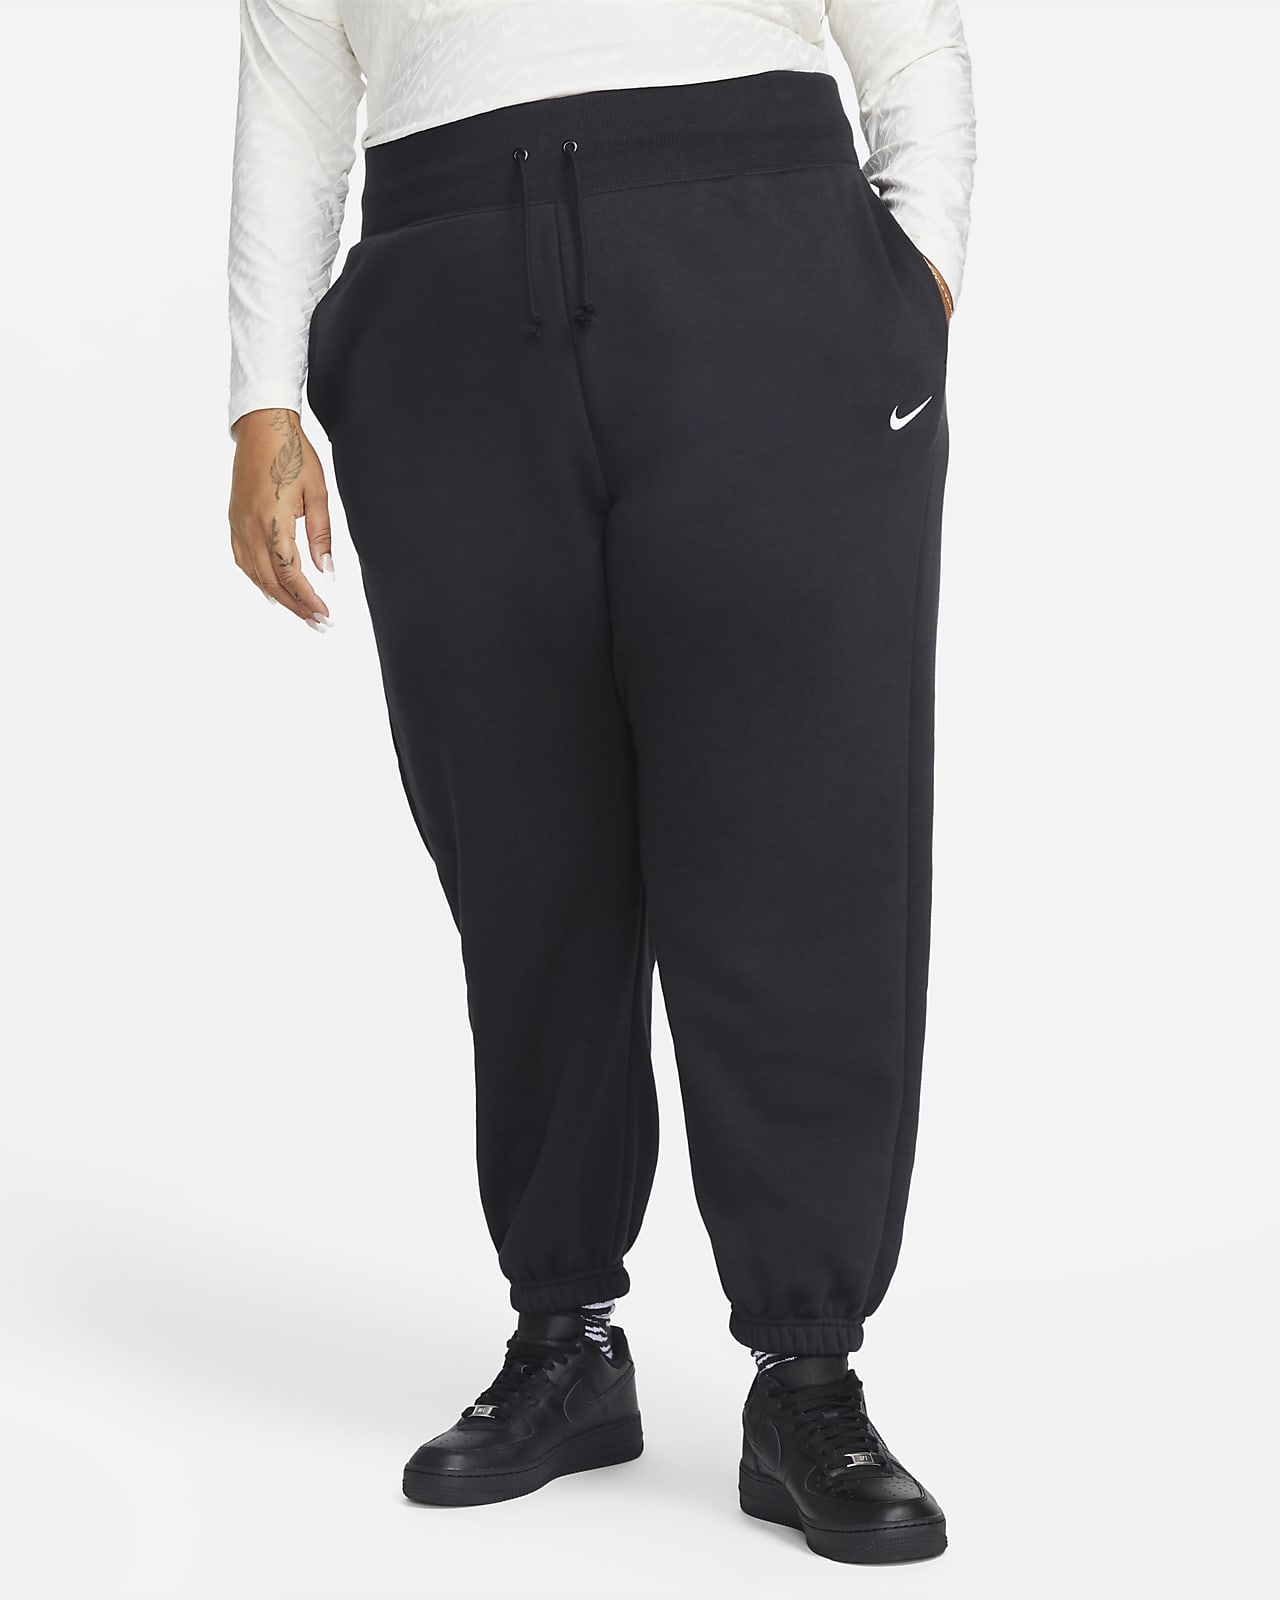 Pantalon de survêtement taille haute oversize Nike Sportswear Phoenix Fleece pour Femme (grande taille)